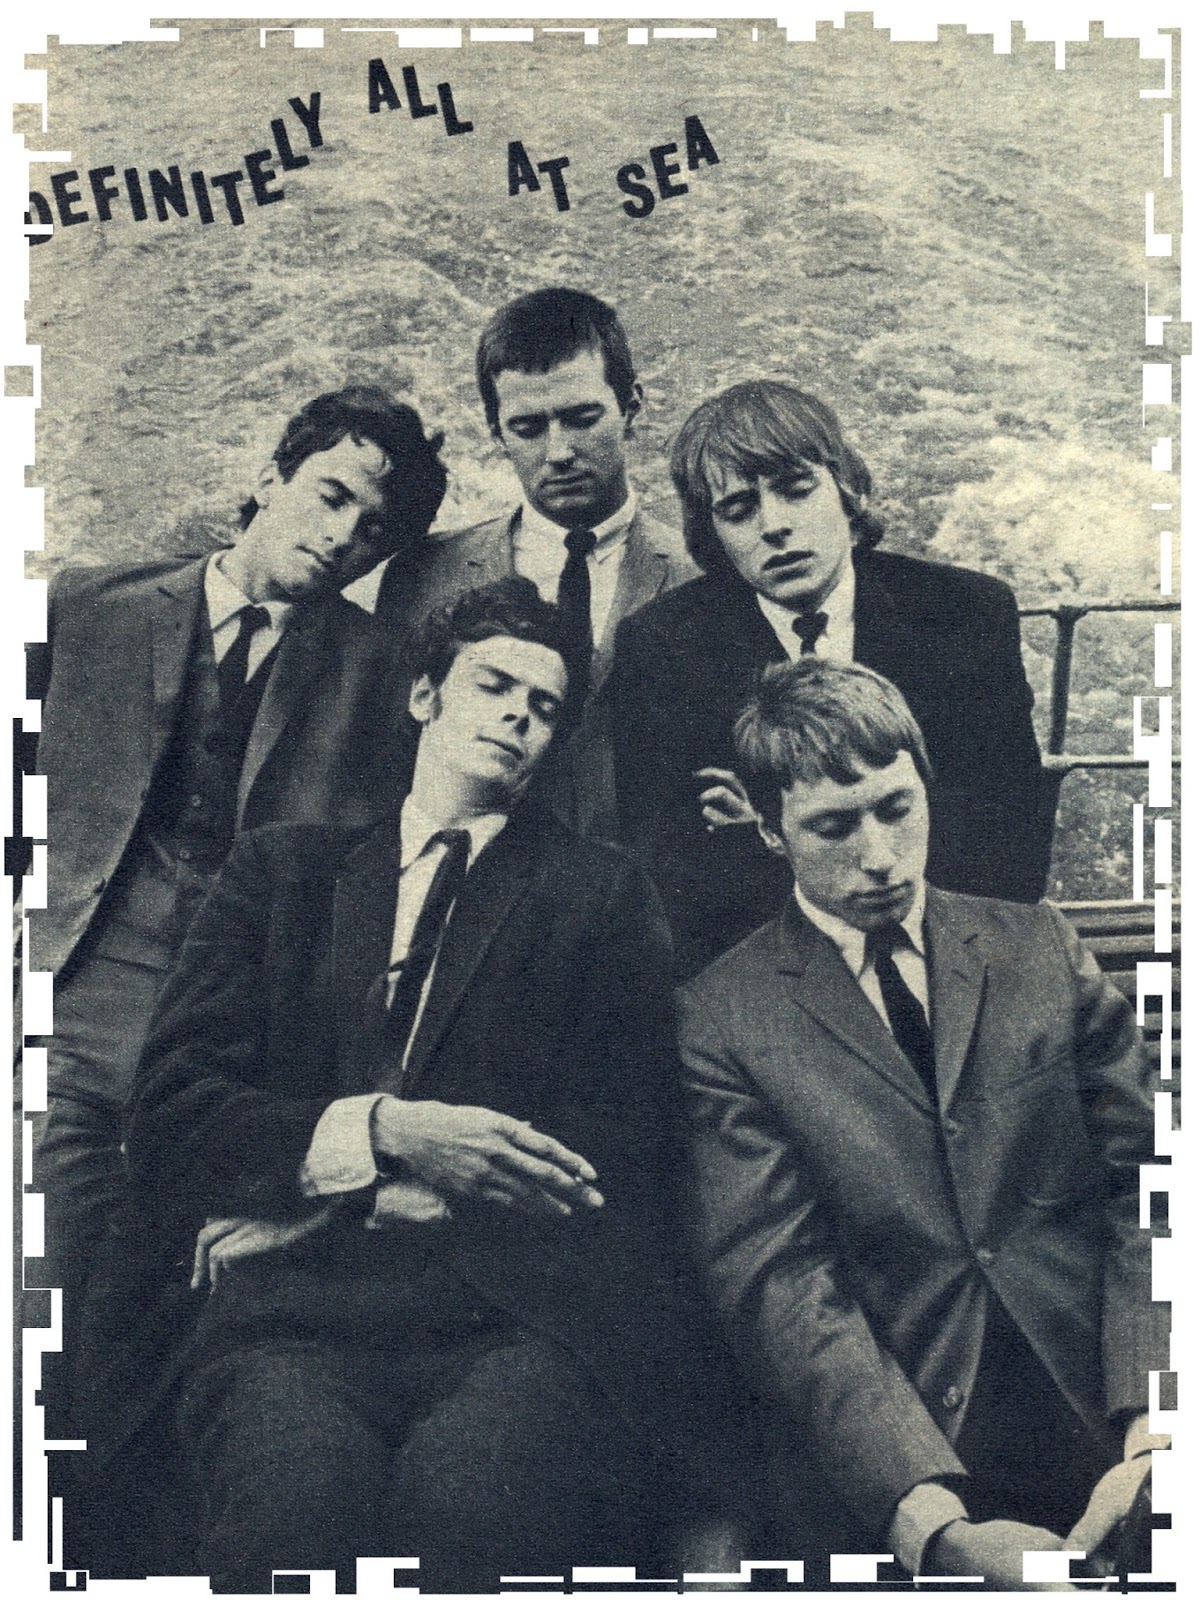 SIXTIES BEAT: The Yardbirds